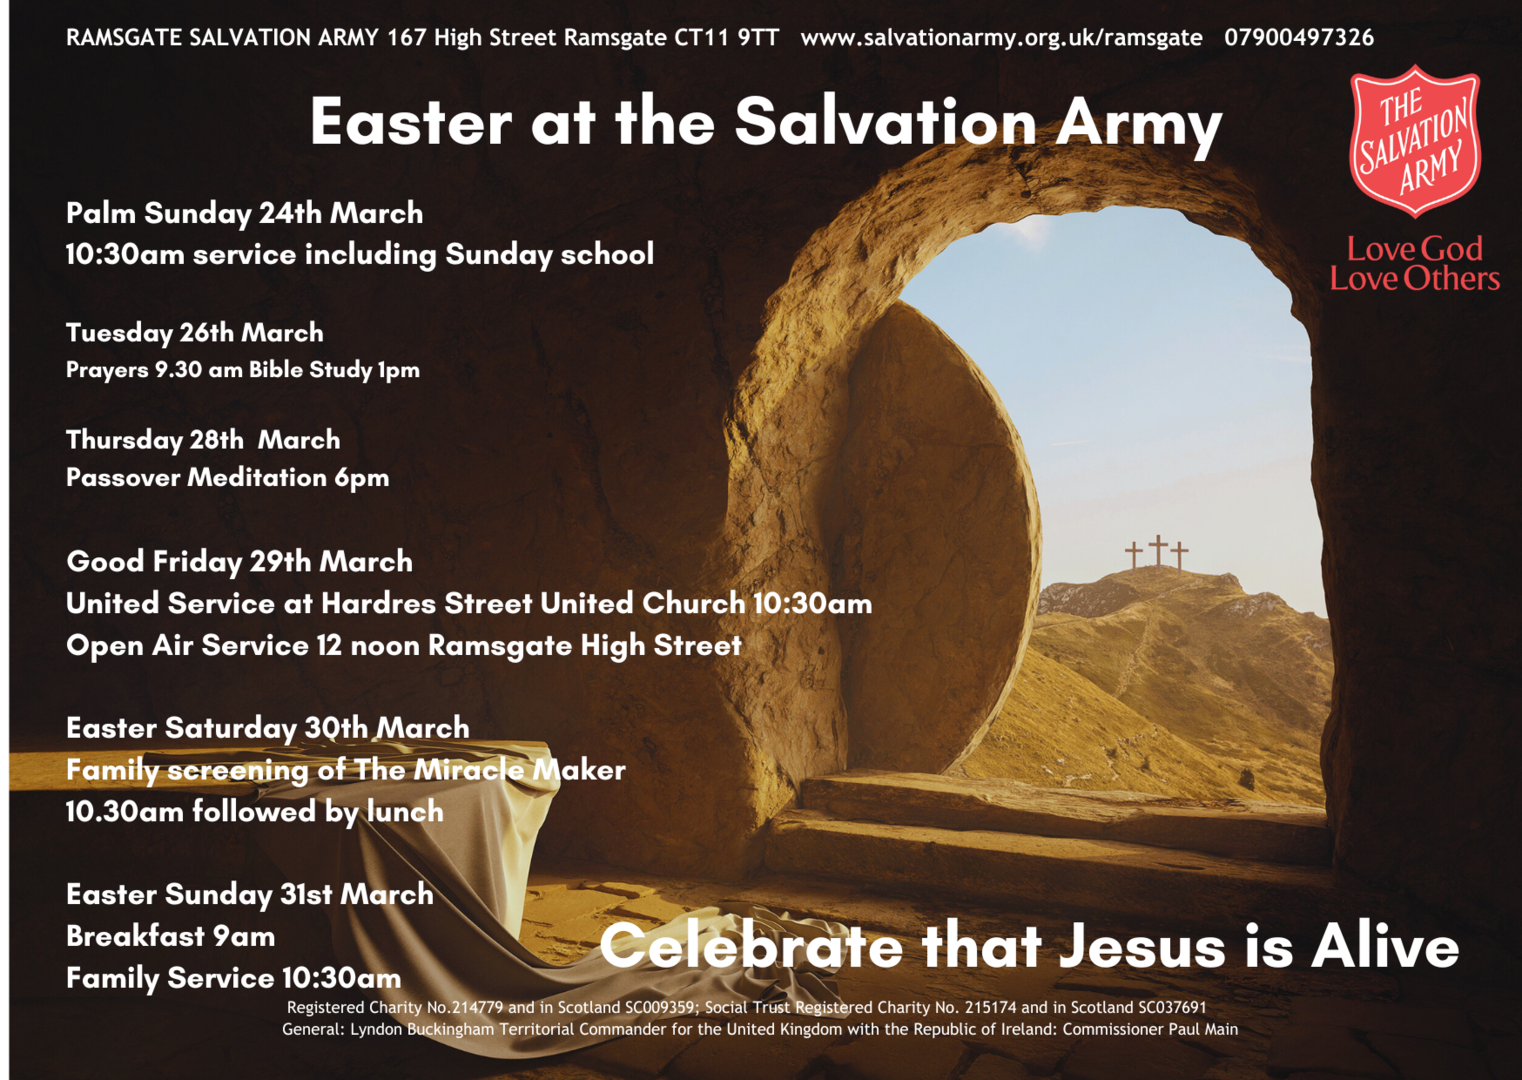 Holy Week at Ramsgate Salvation Army